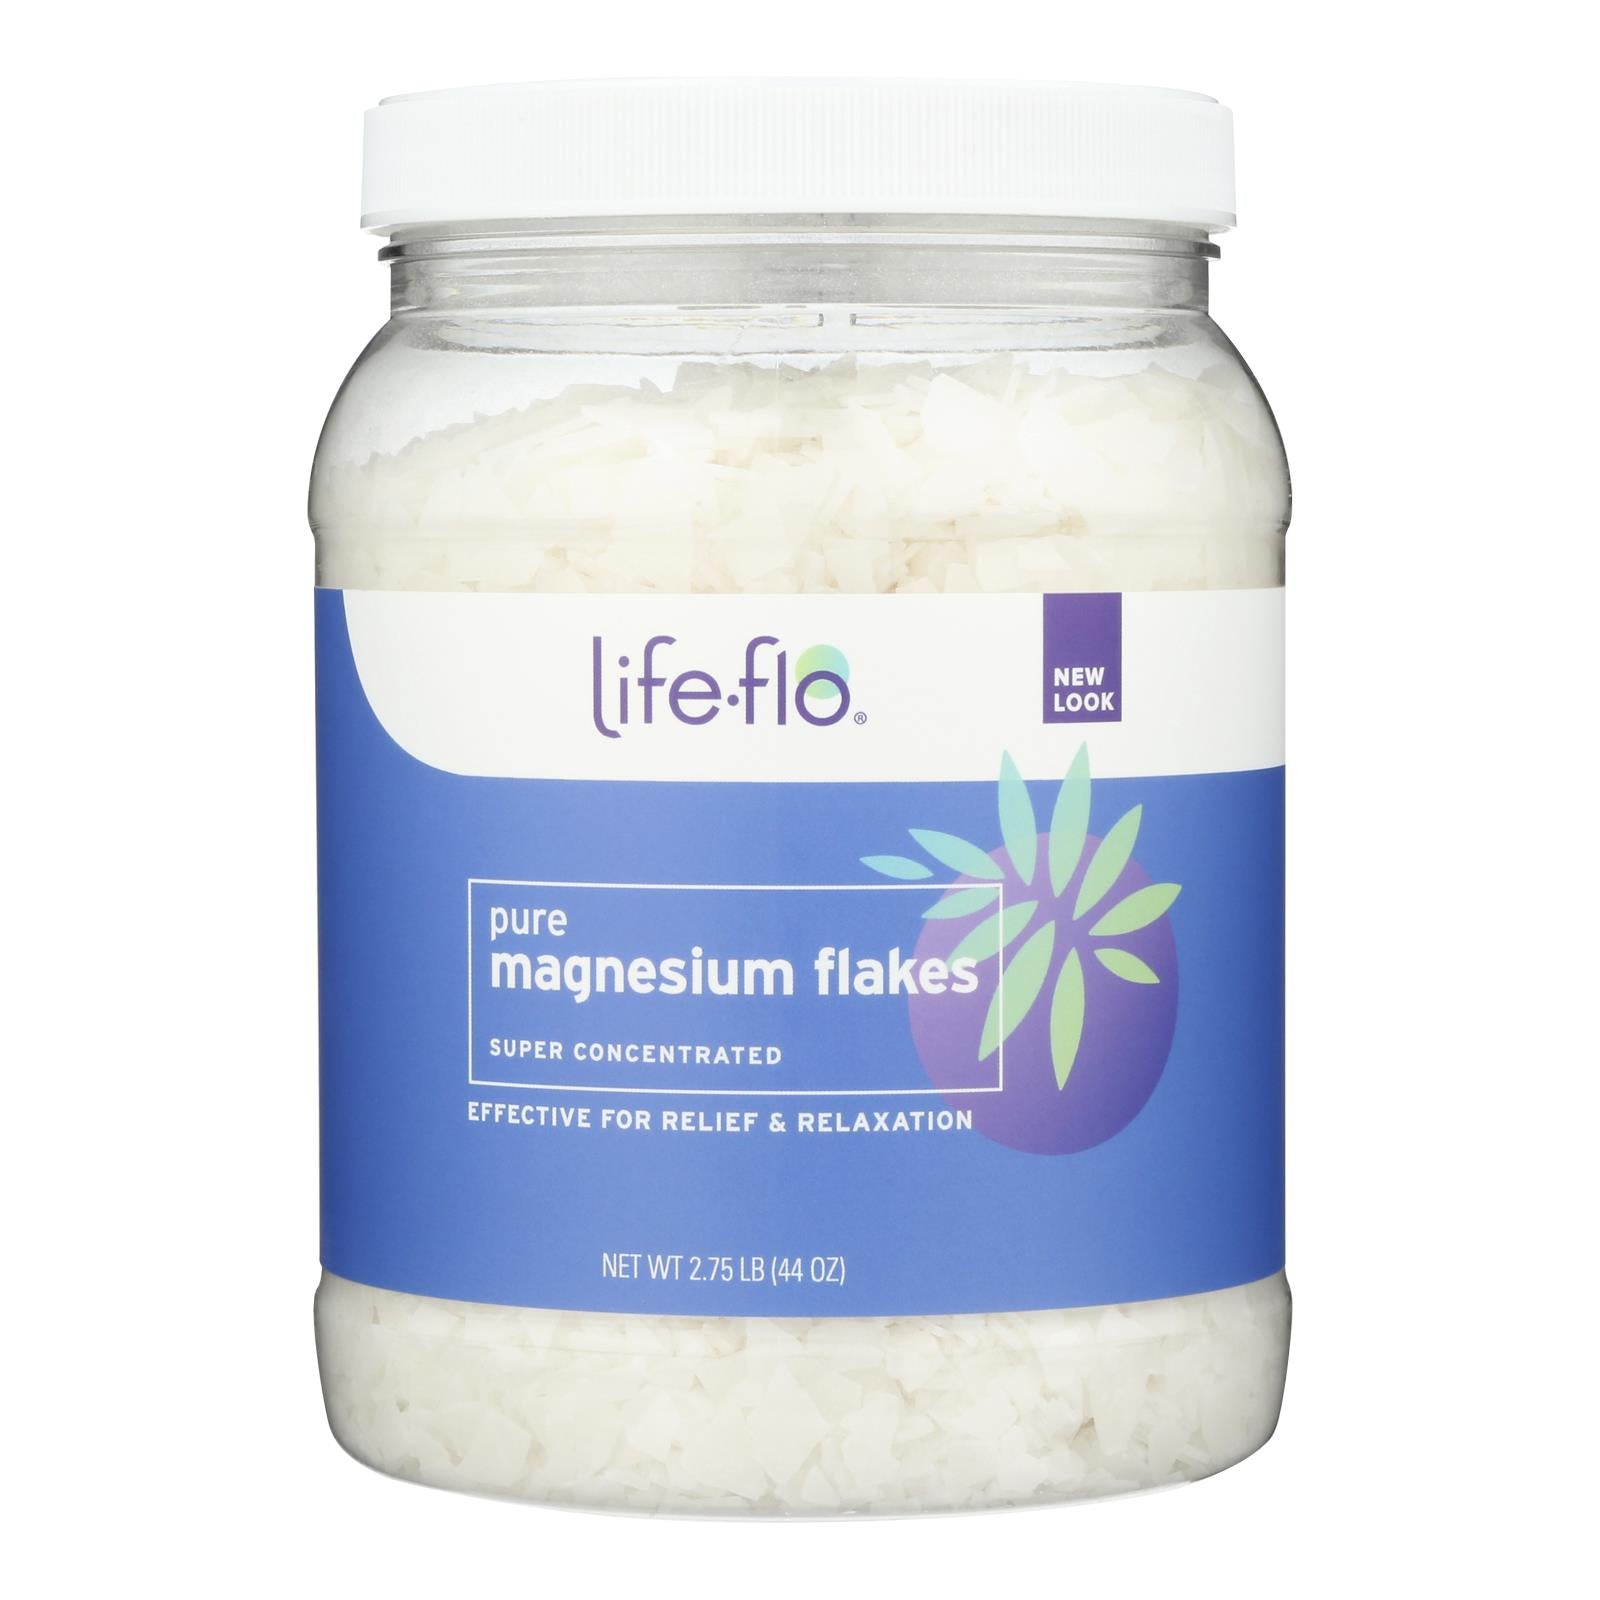 Life-flo Pure Magnesium Flakes  - 1 Each - 2.75 Lb